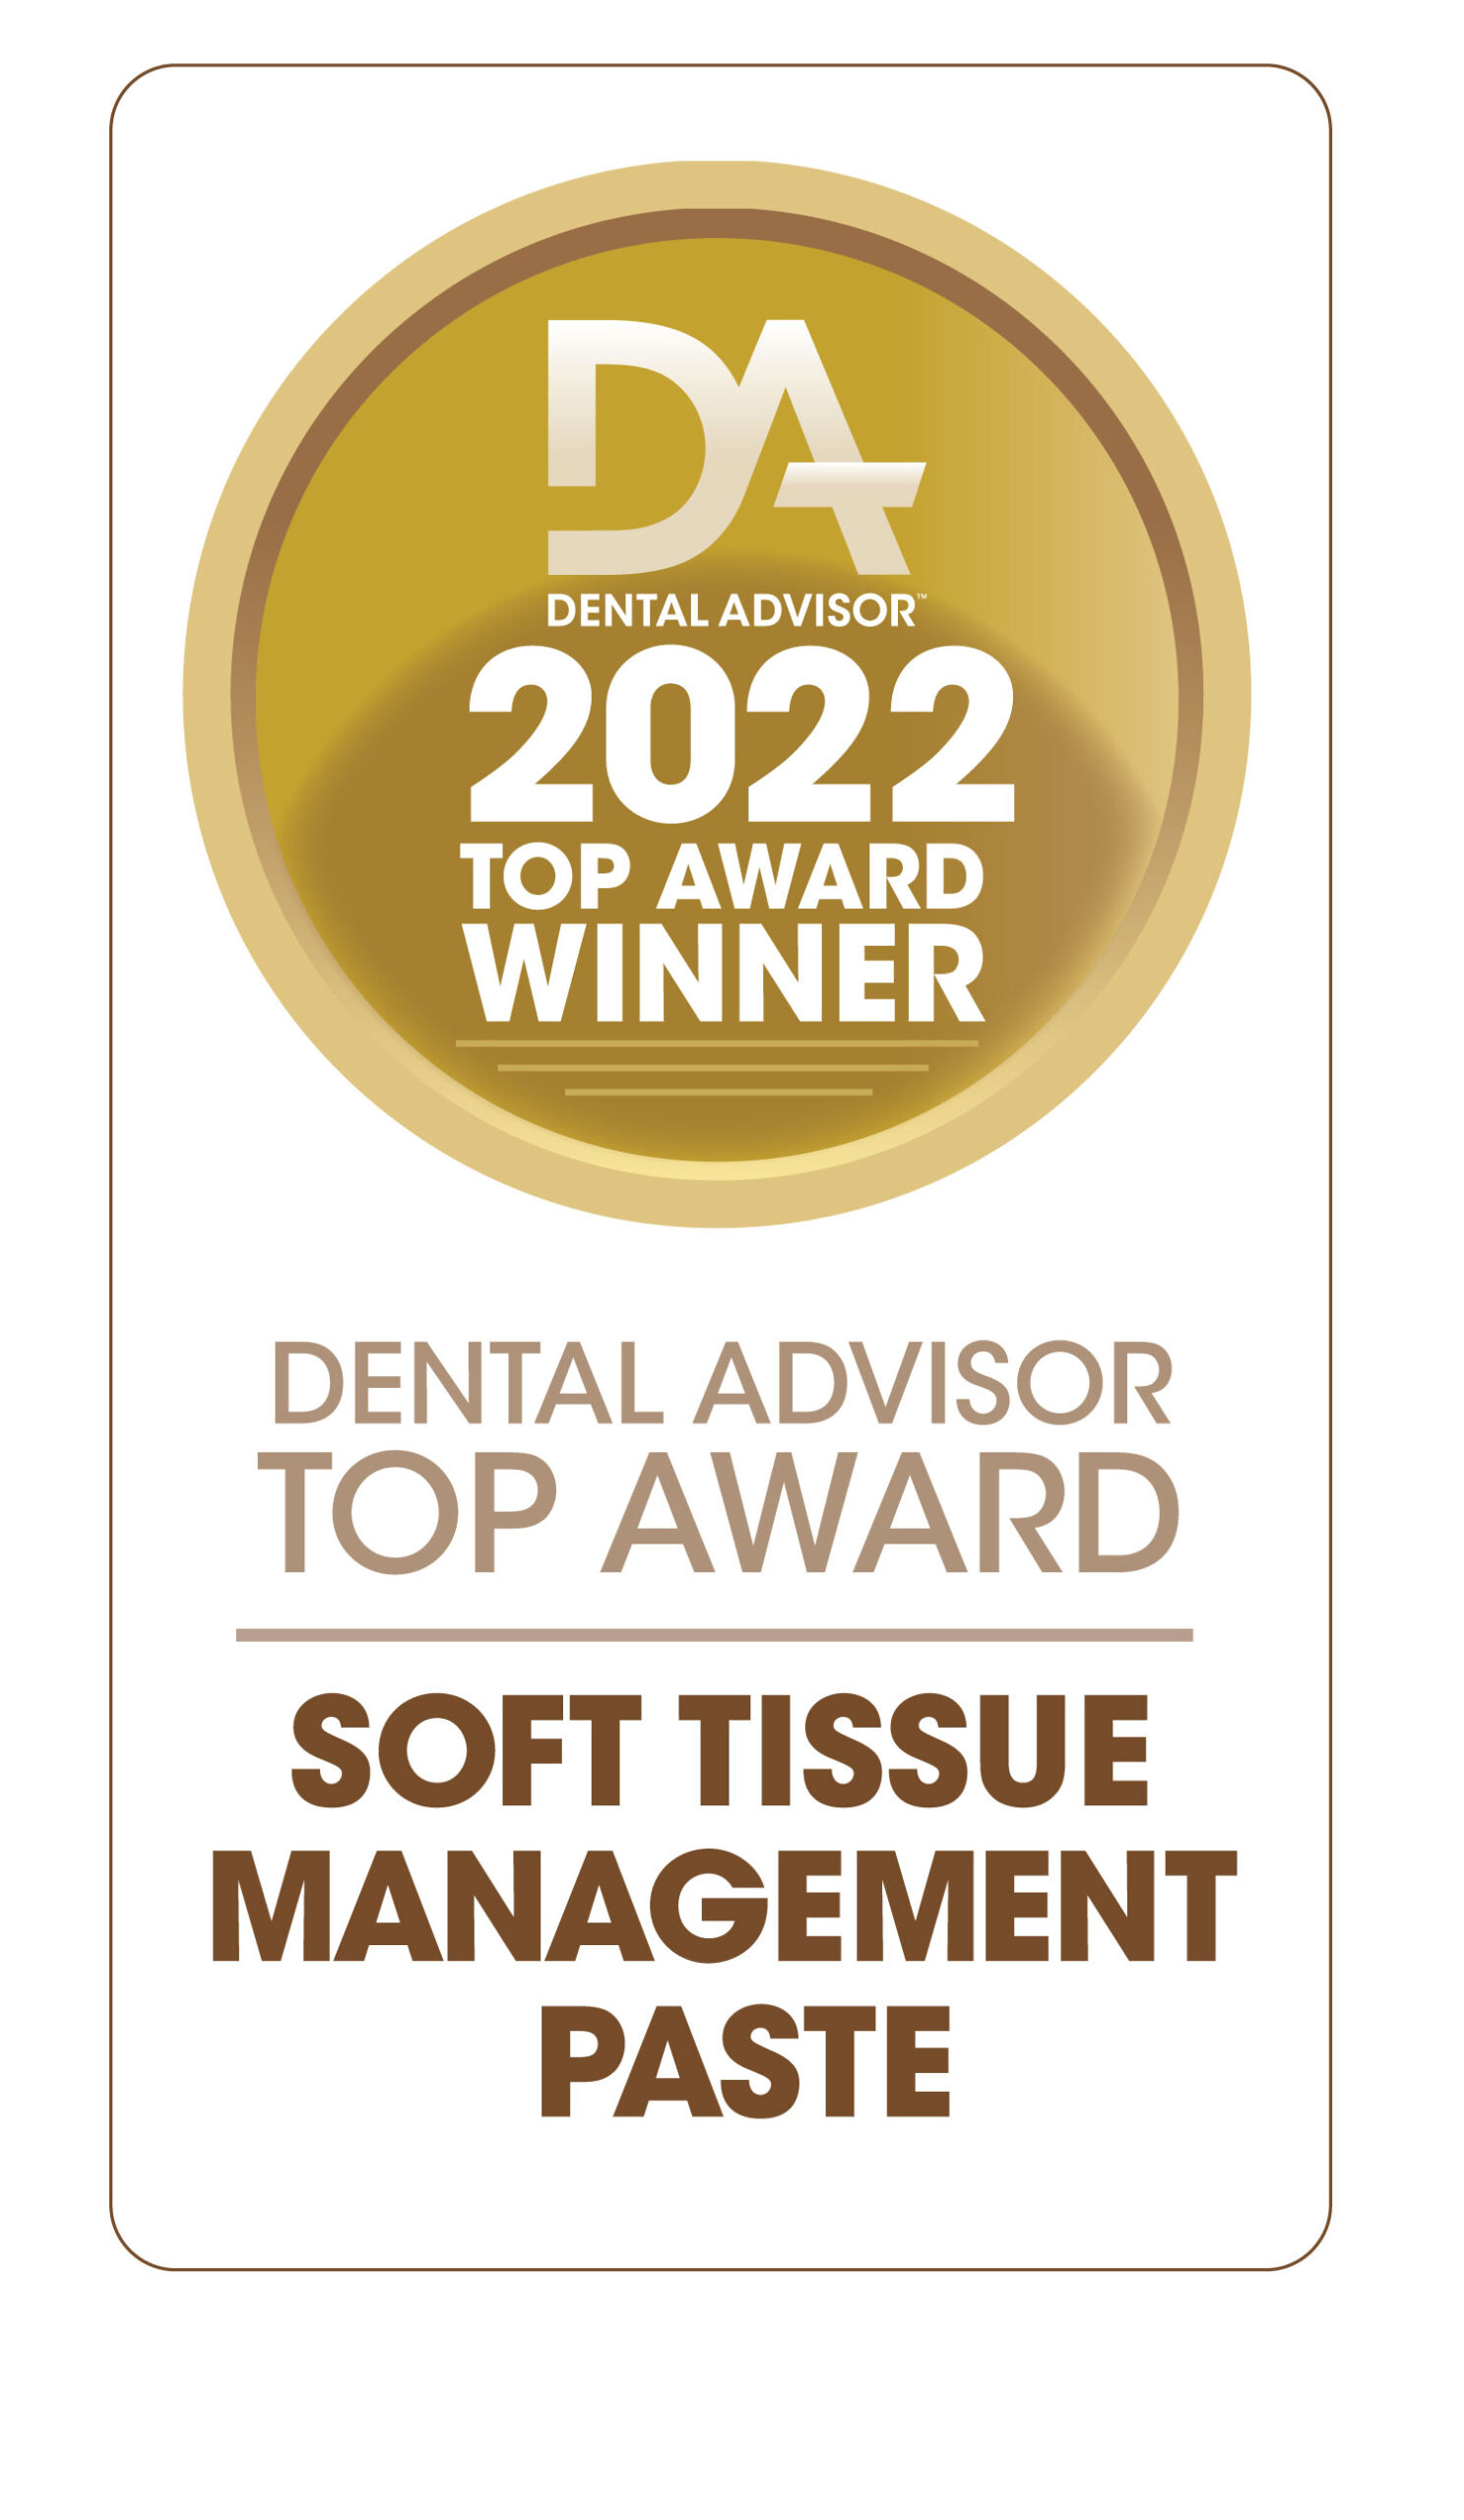 Dental Advisor Top Award 2022: Soft Tissue Management Paste awarded to Traxodent